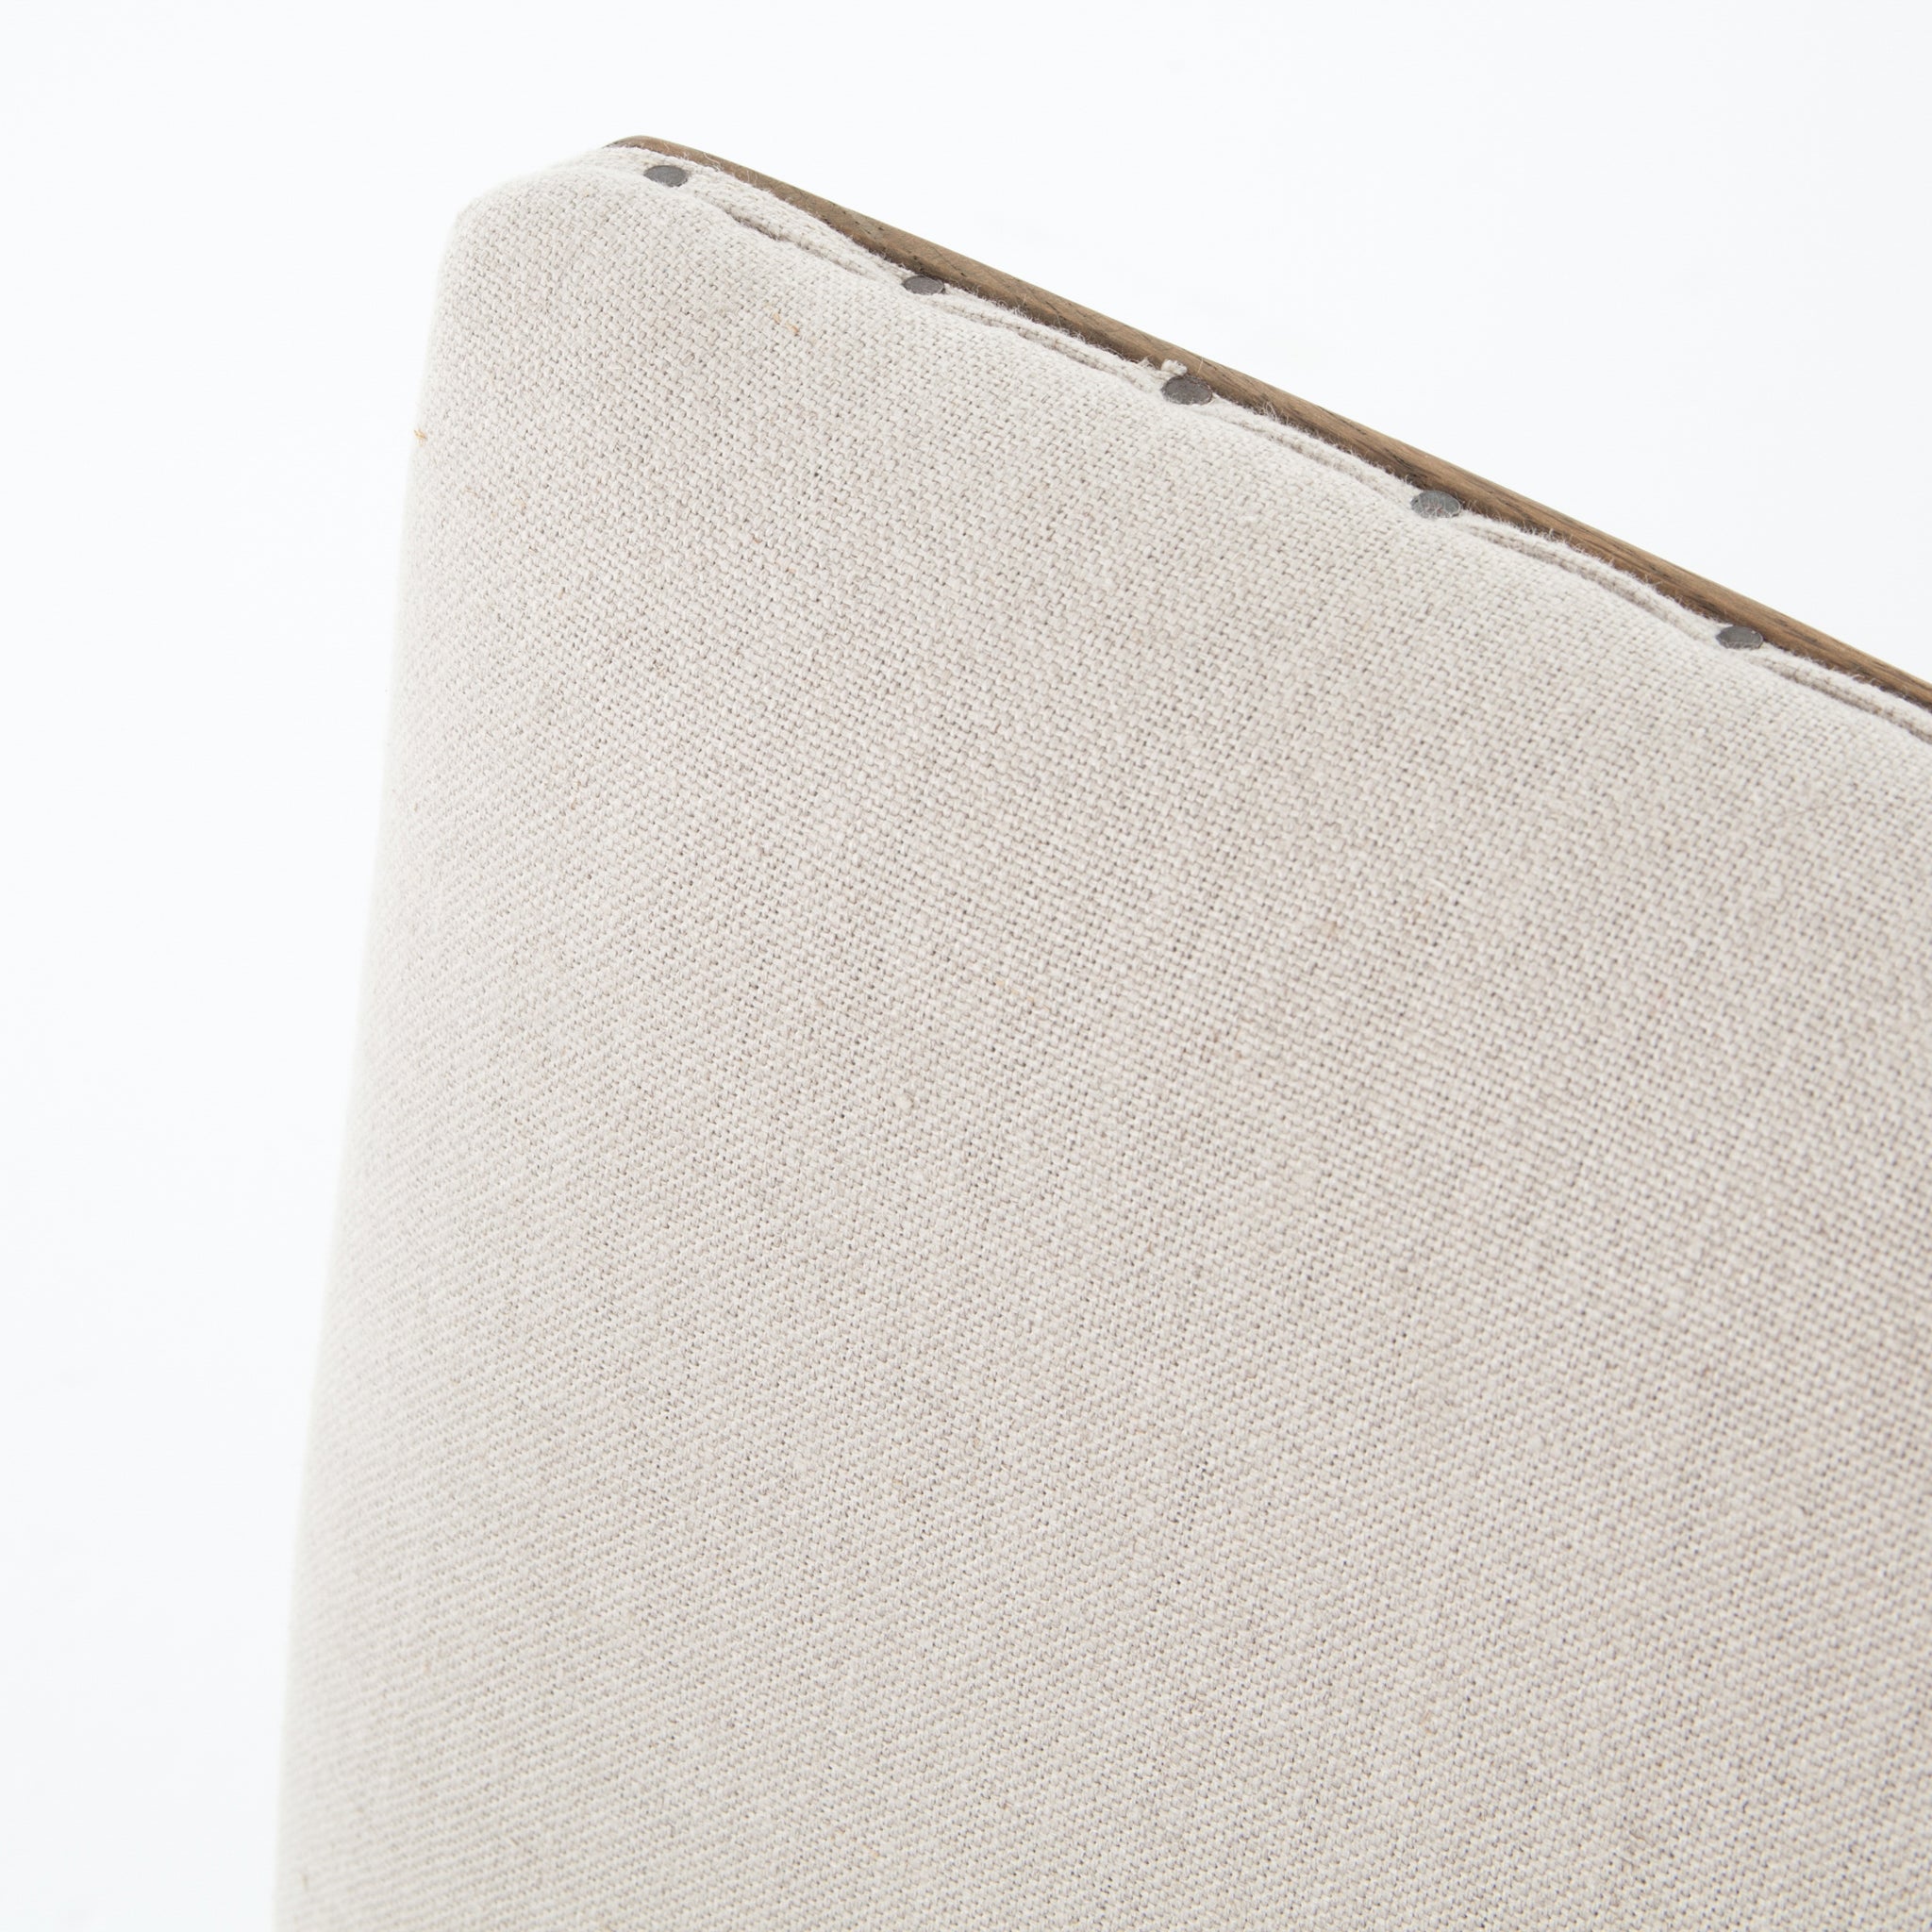 Dark Linen Fabric & Dark Nettlewood with Shoe Nail Iron | Kurt Dining Chair | Valley Ridge Furniture